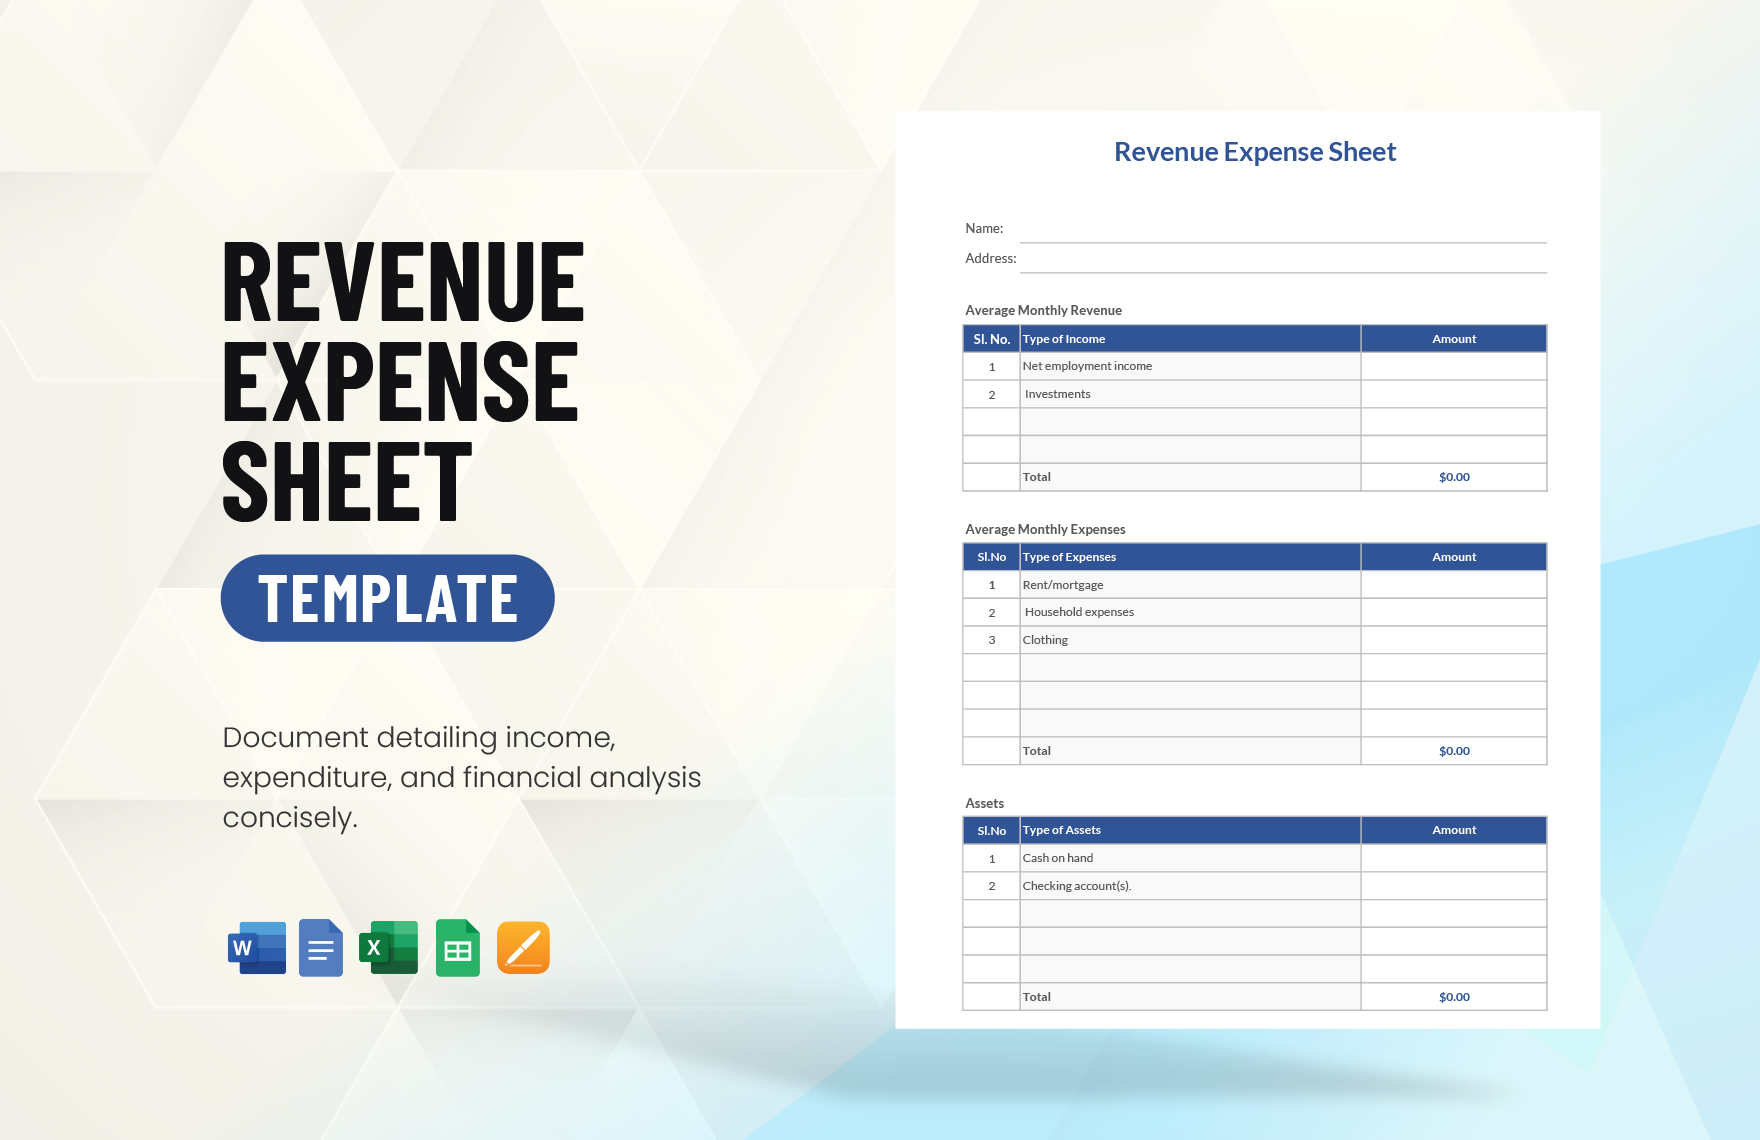 Revenue Expense Sheet Template